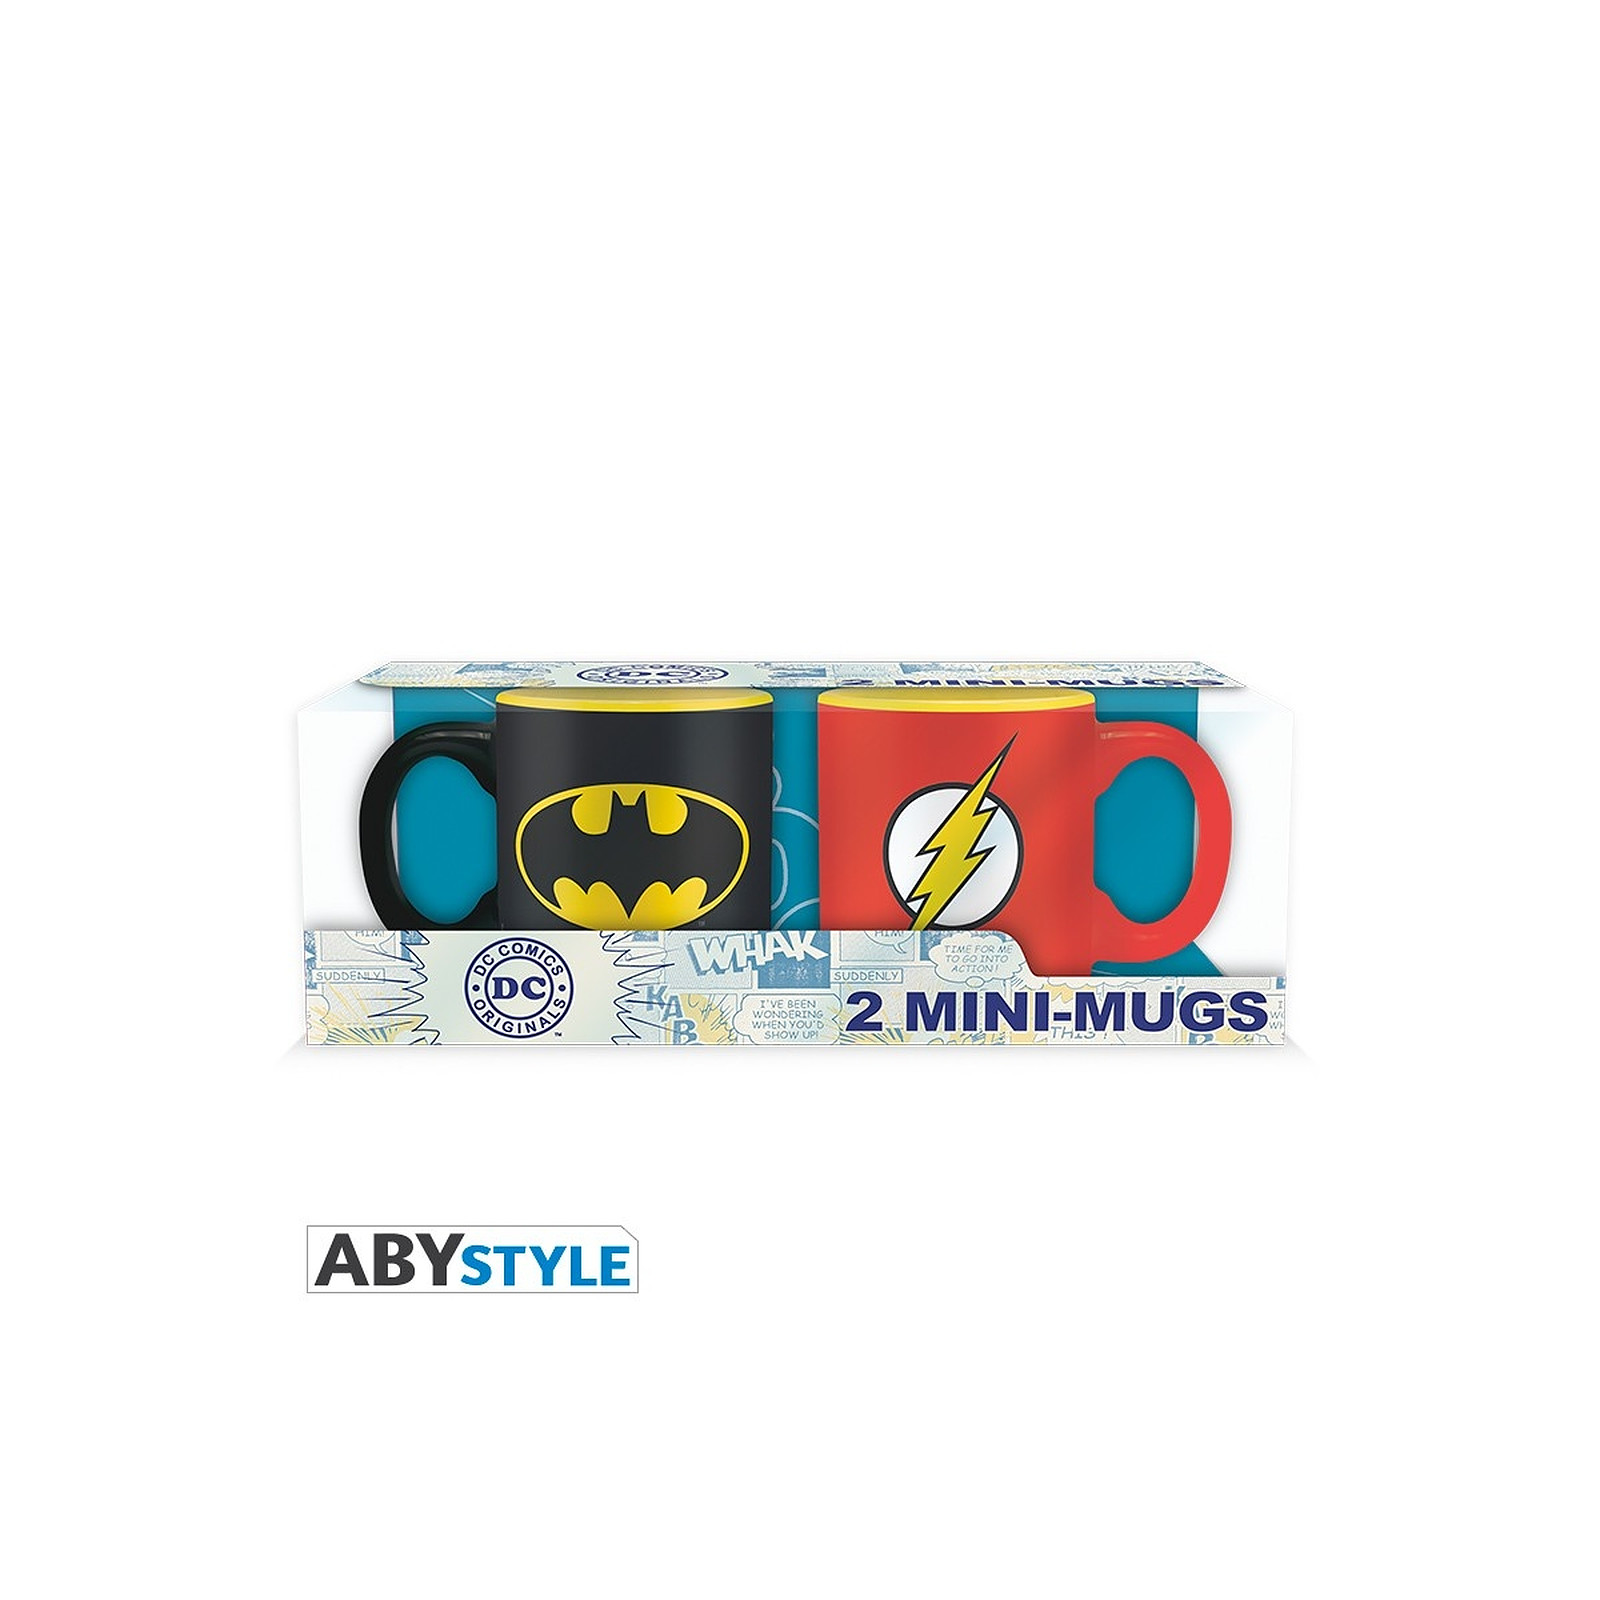 DC COMICS - Set 2 mini-mugs - 110 ml - Batman & Flash x2 - Mugs Abystyle